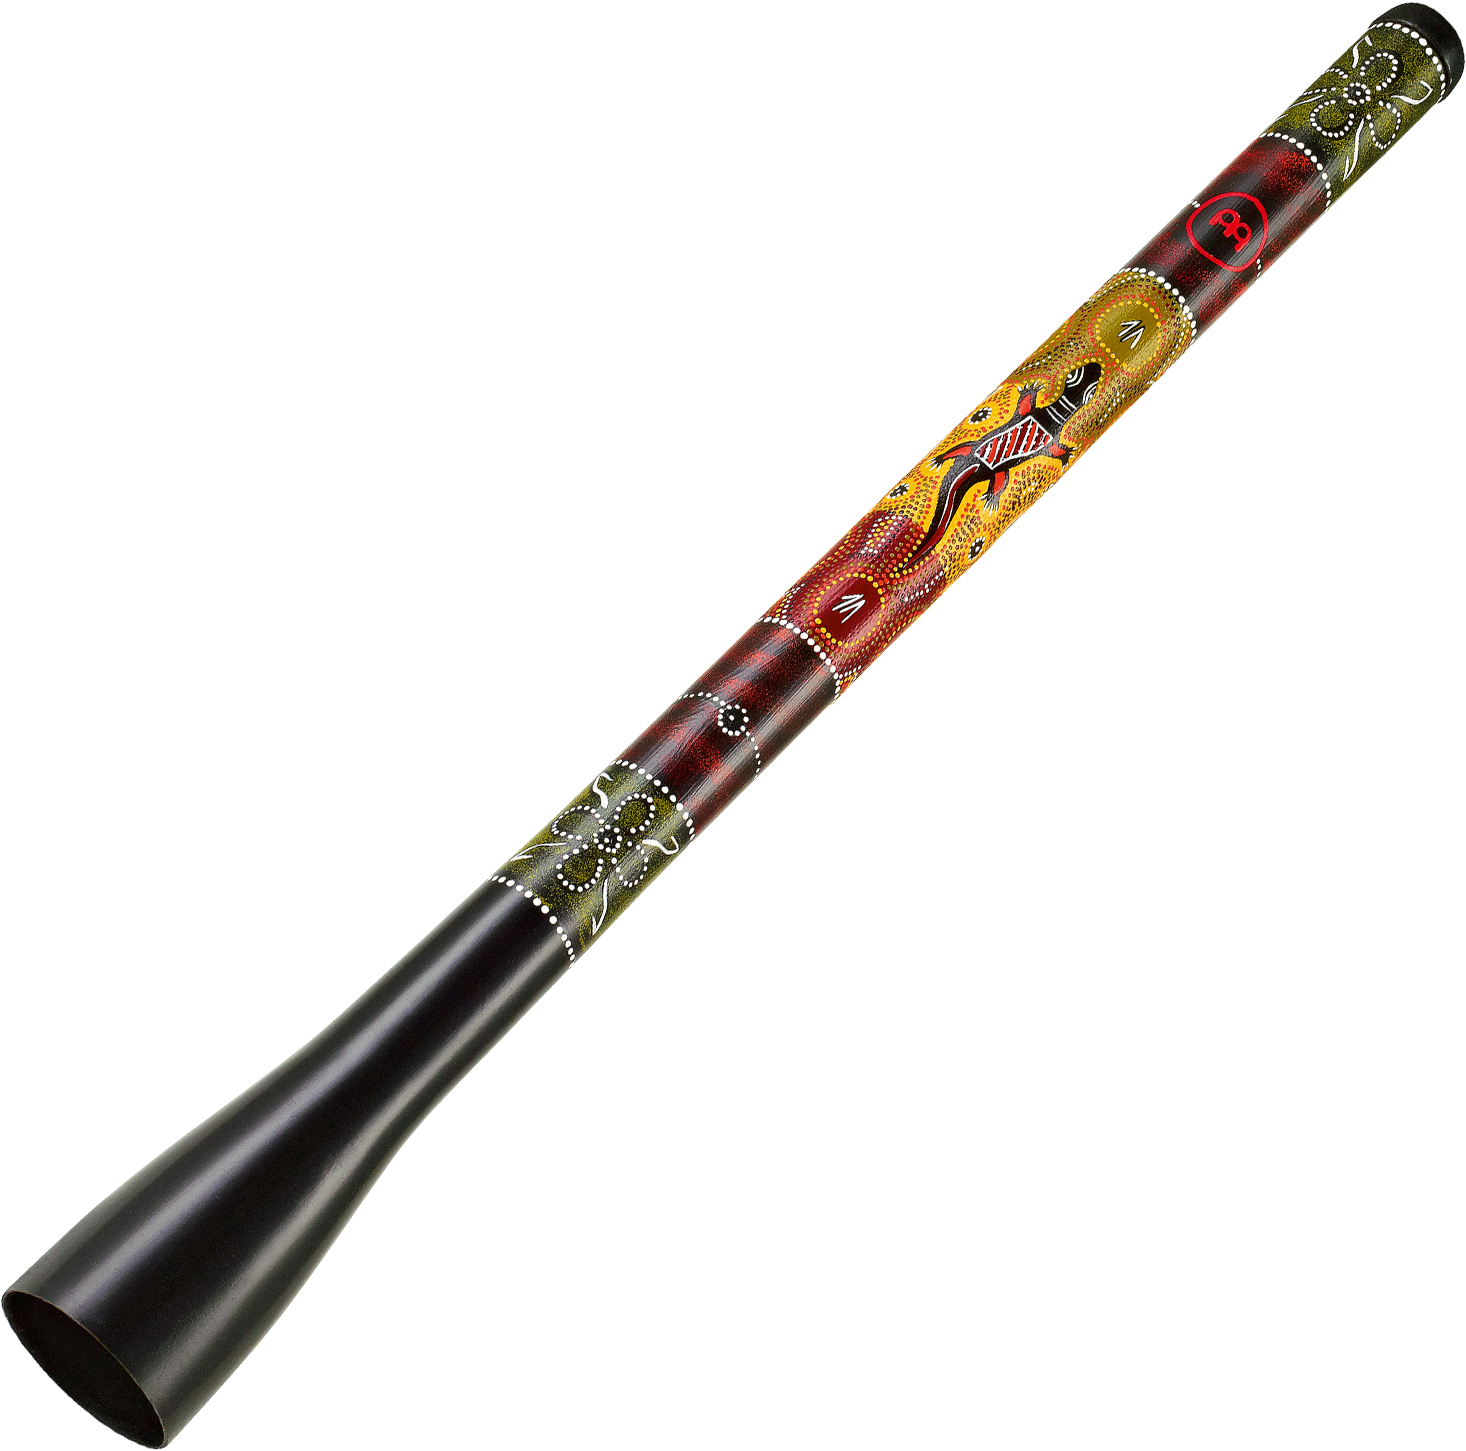 Gambar didgeridoo Transparan